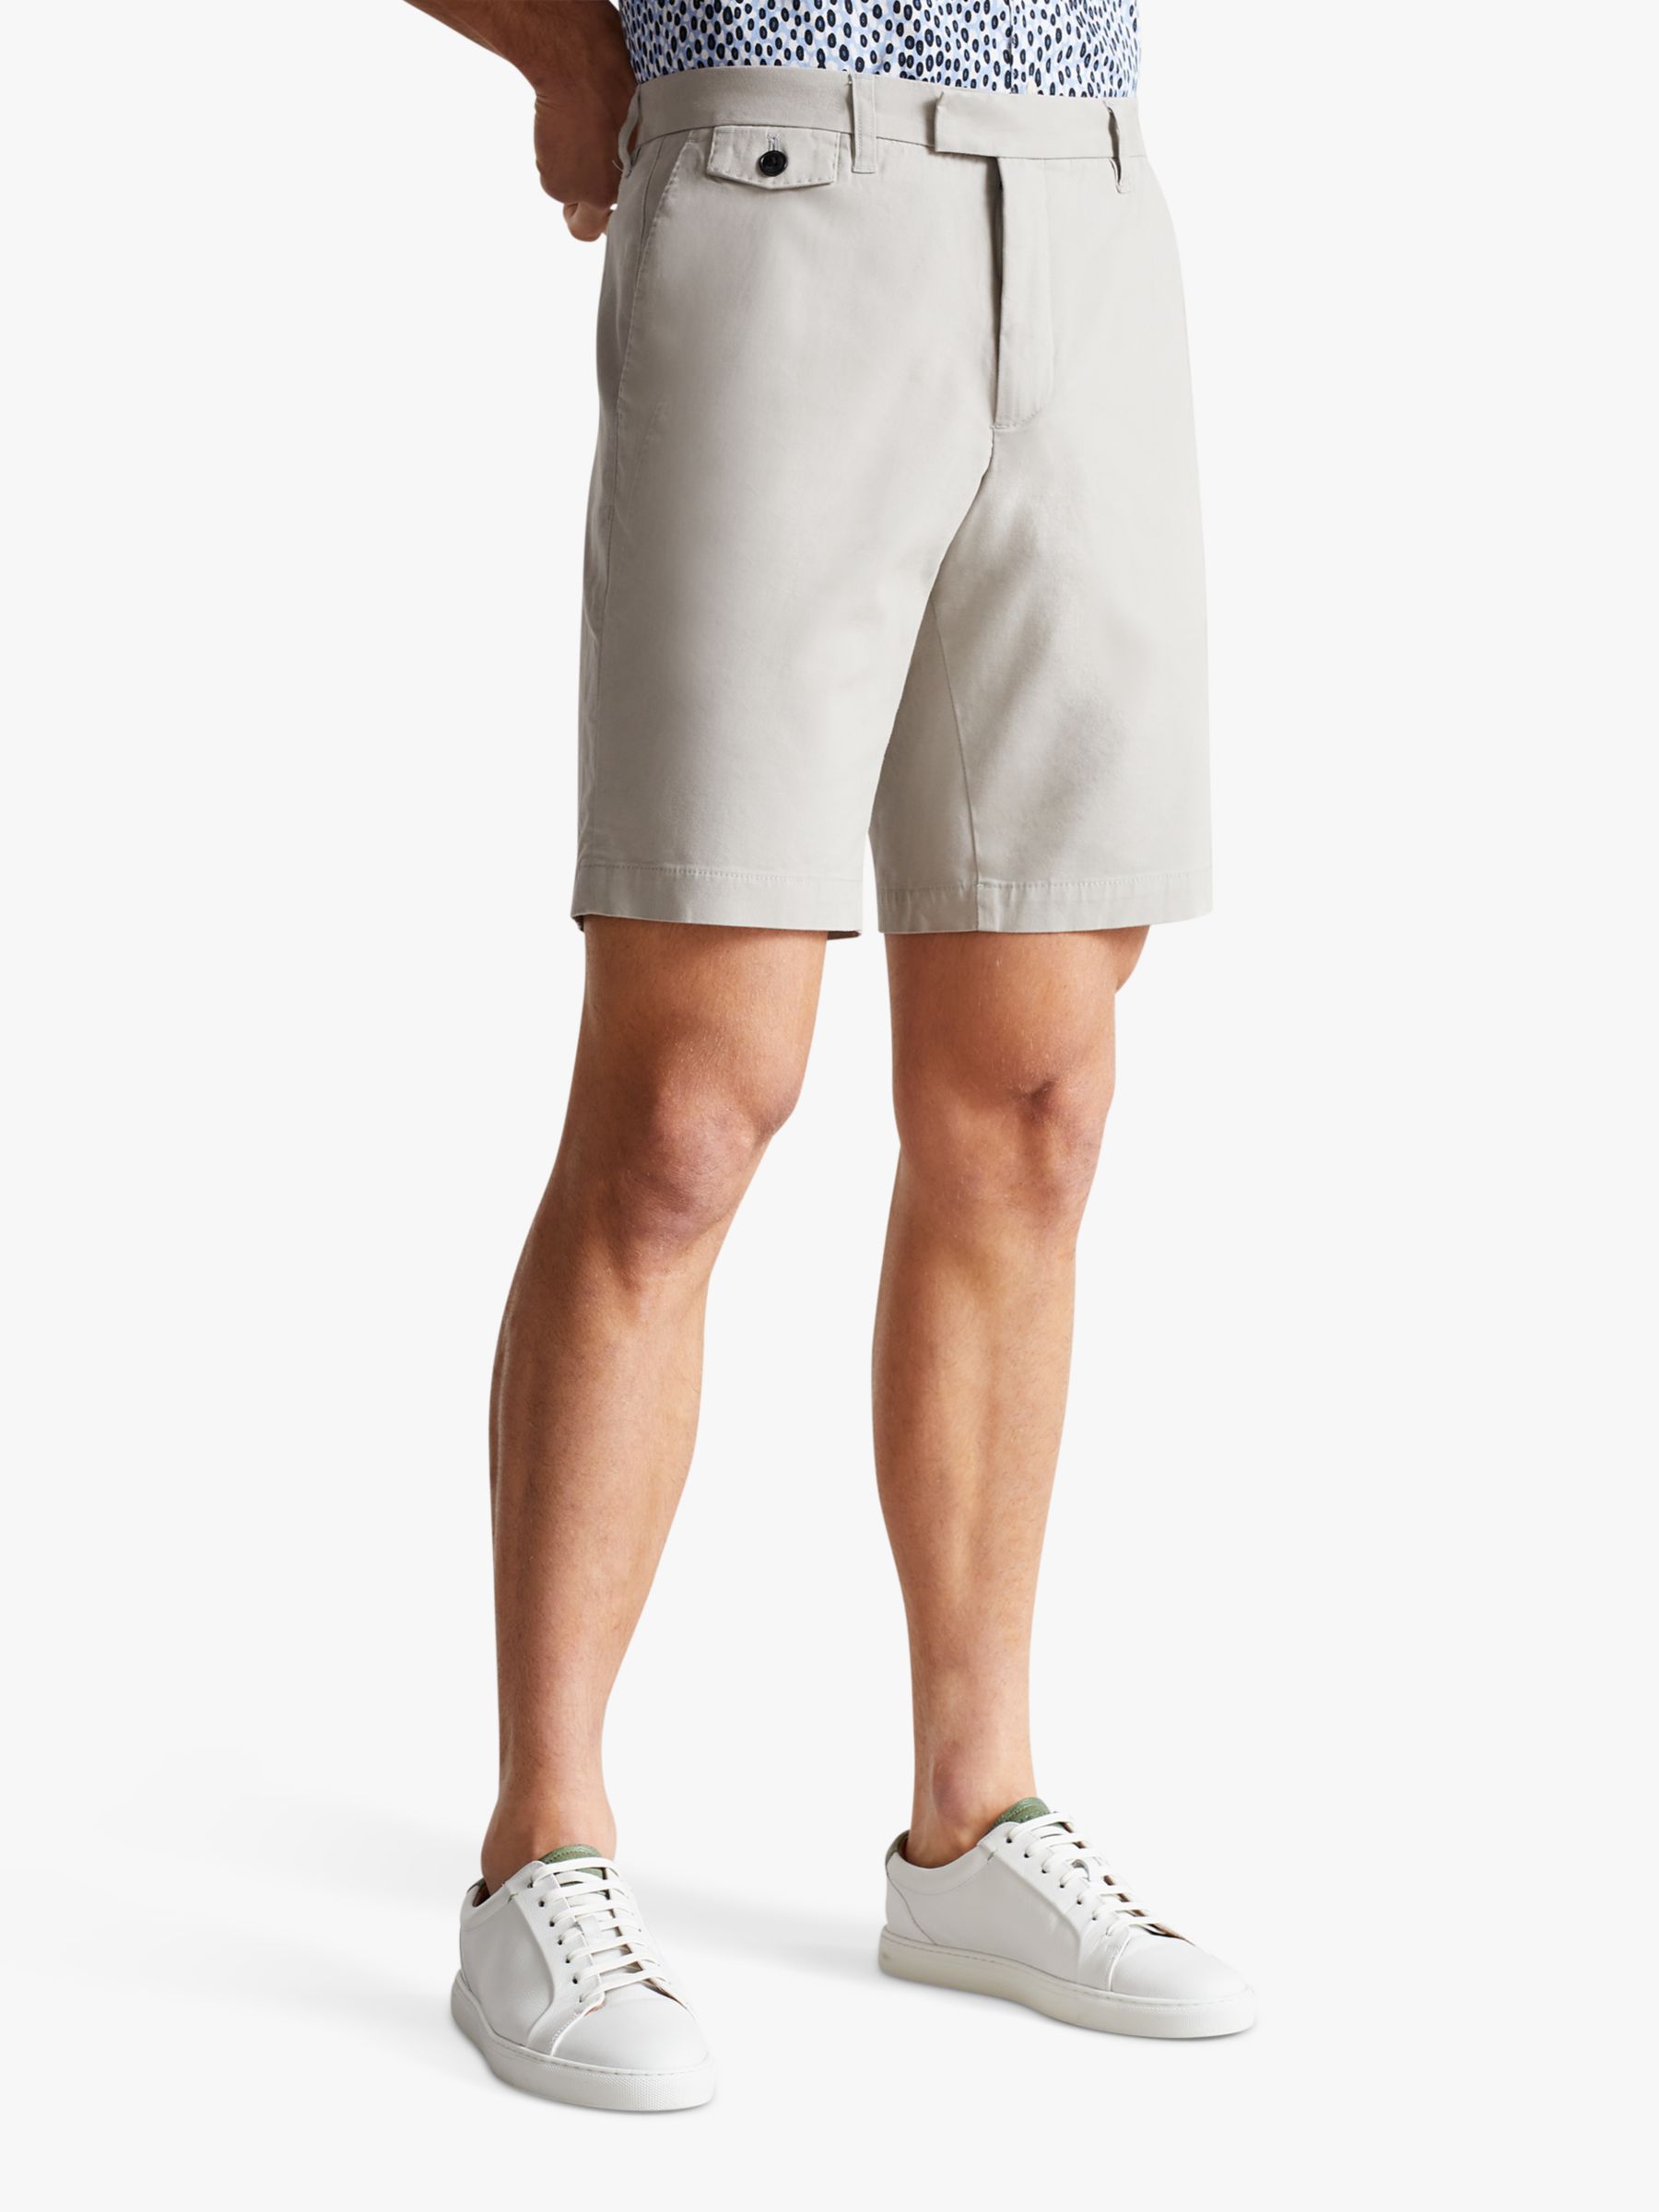 Ted Baker Ashfrd Chino Shorts, Light Grey, 34R